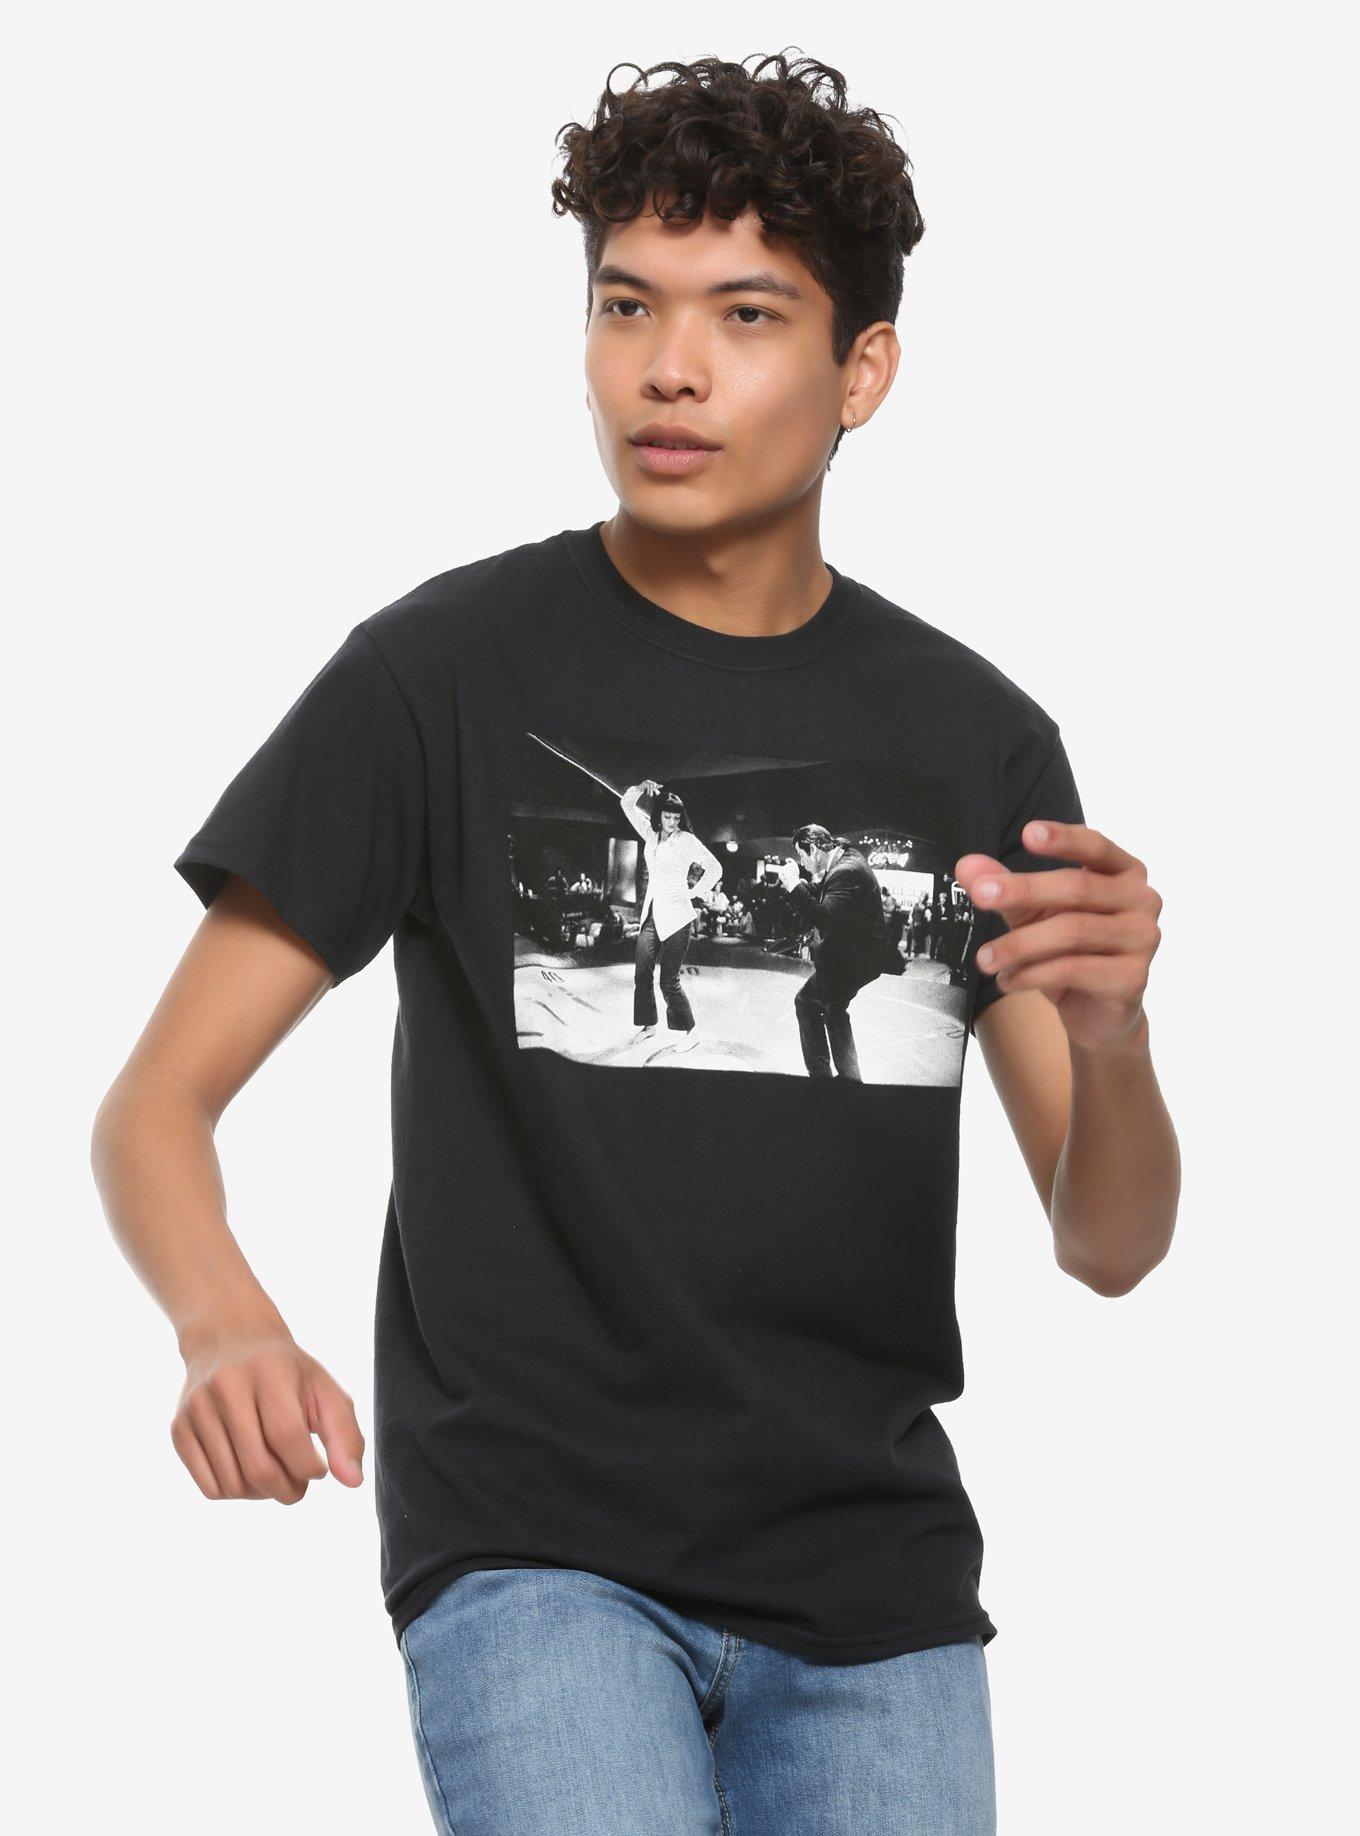 Pulp Fiction Dancing Black & White Photo T-Shirt, WHITE, alternate